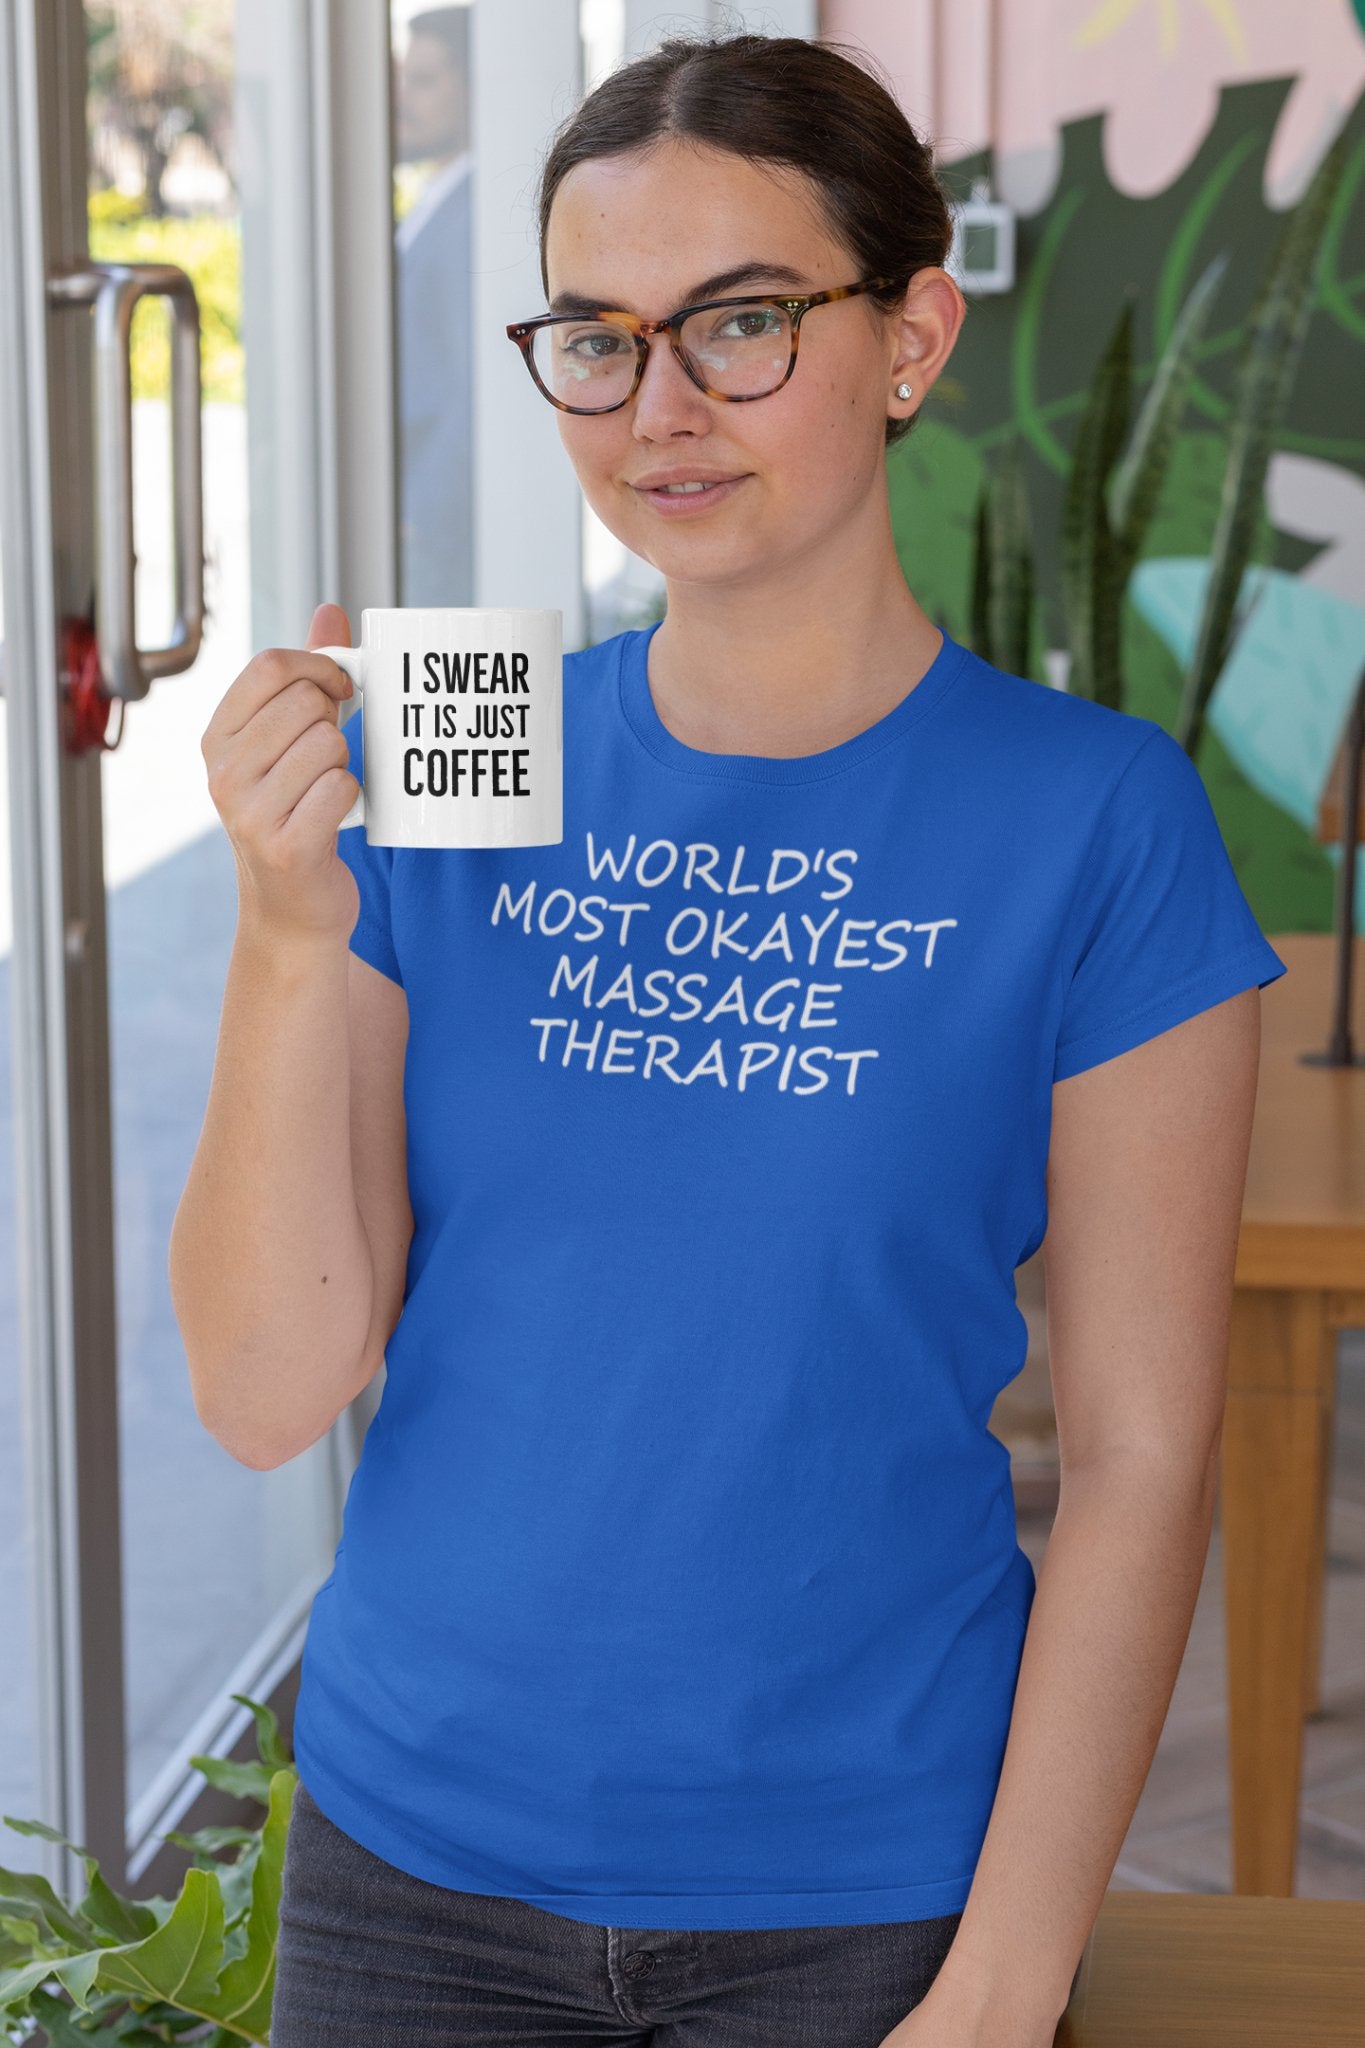 CrazyYetiClothing, CYC, WMO - Massage Therapist (Unisex Tee), T-Shirt